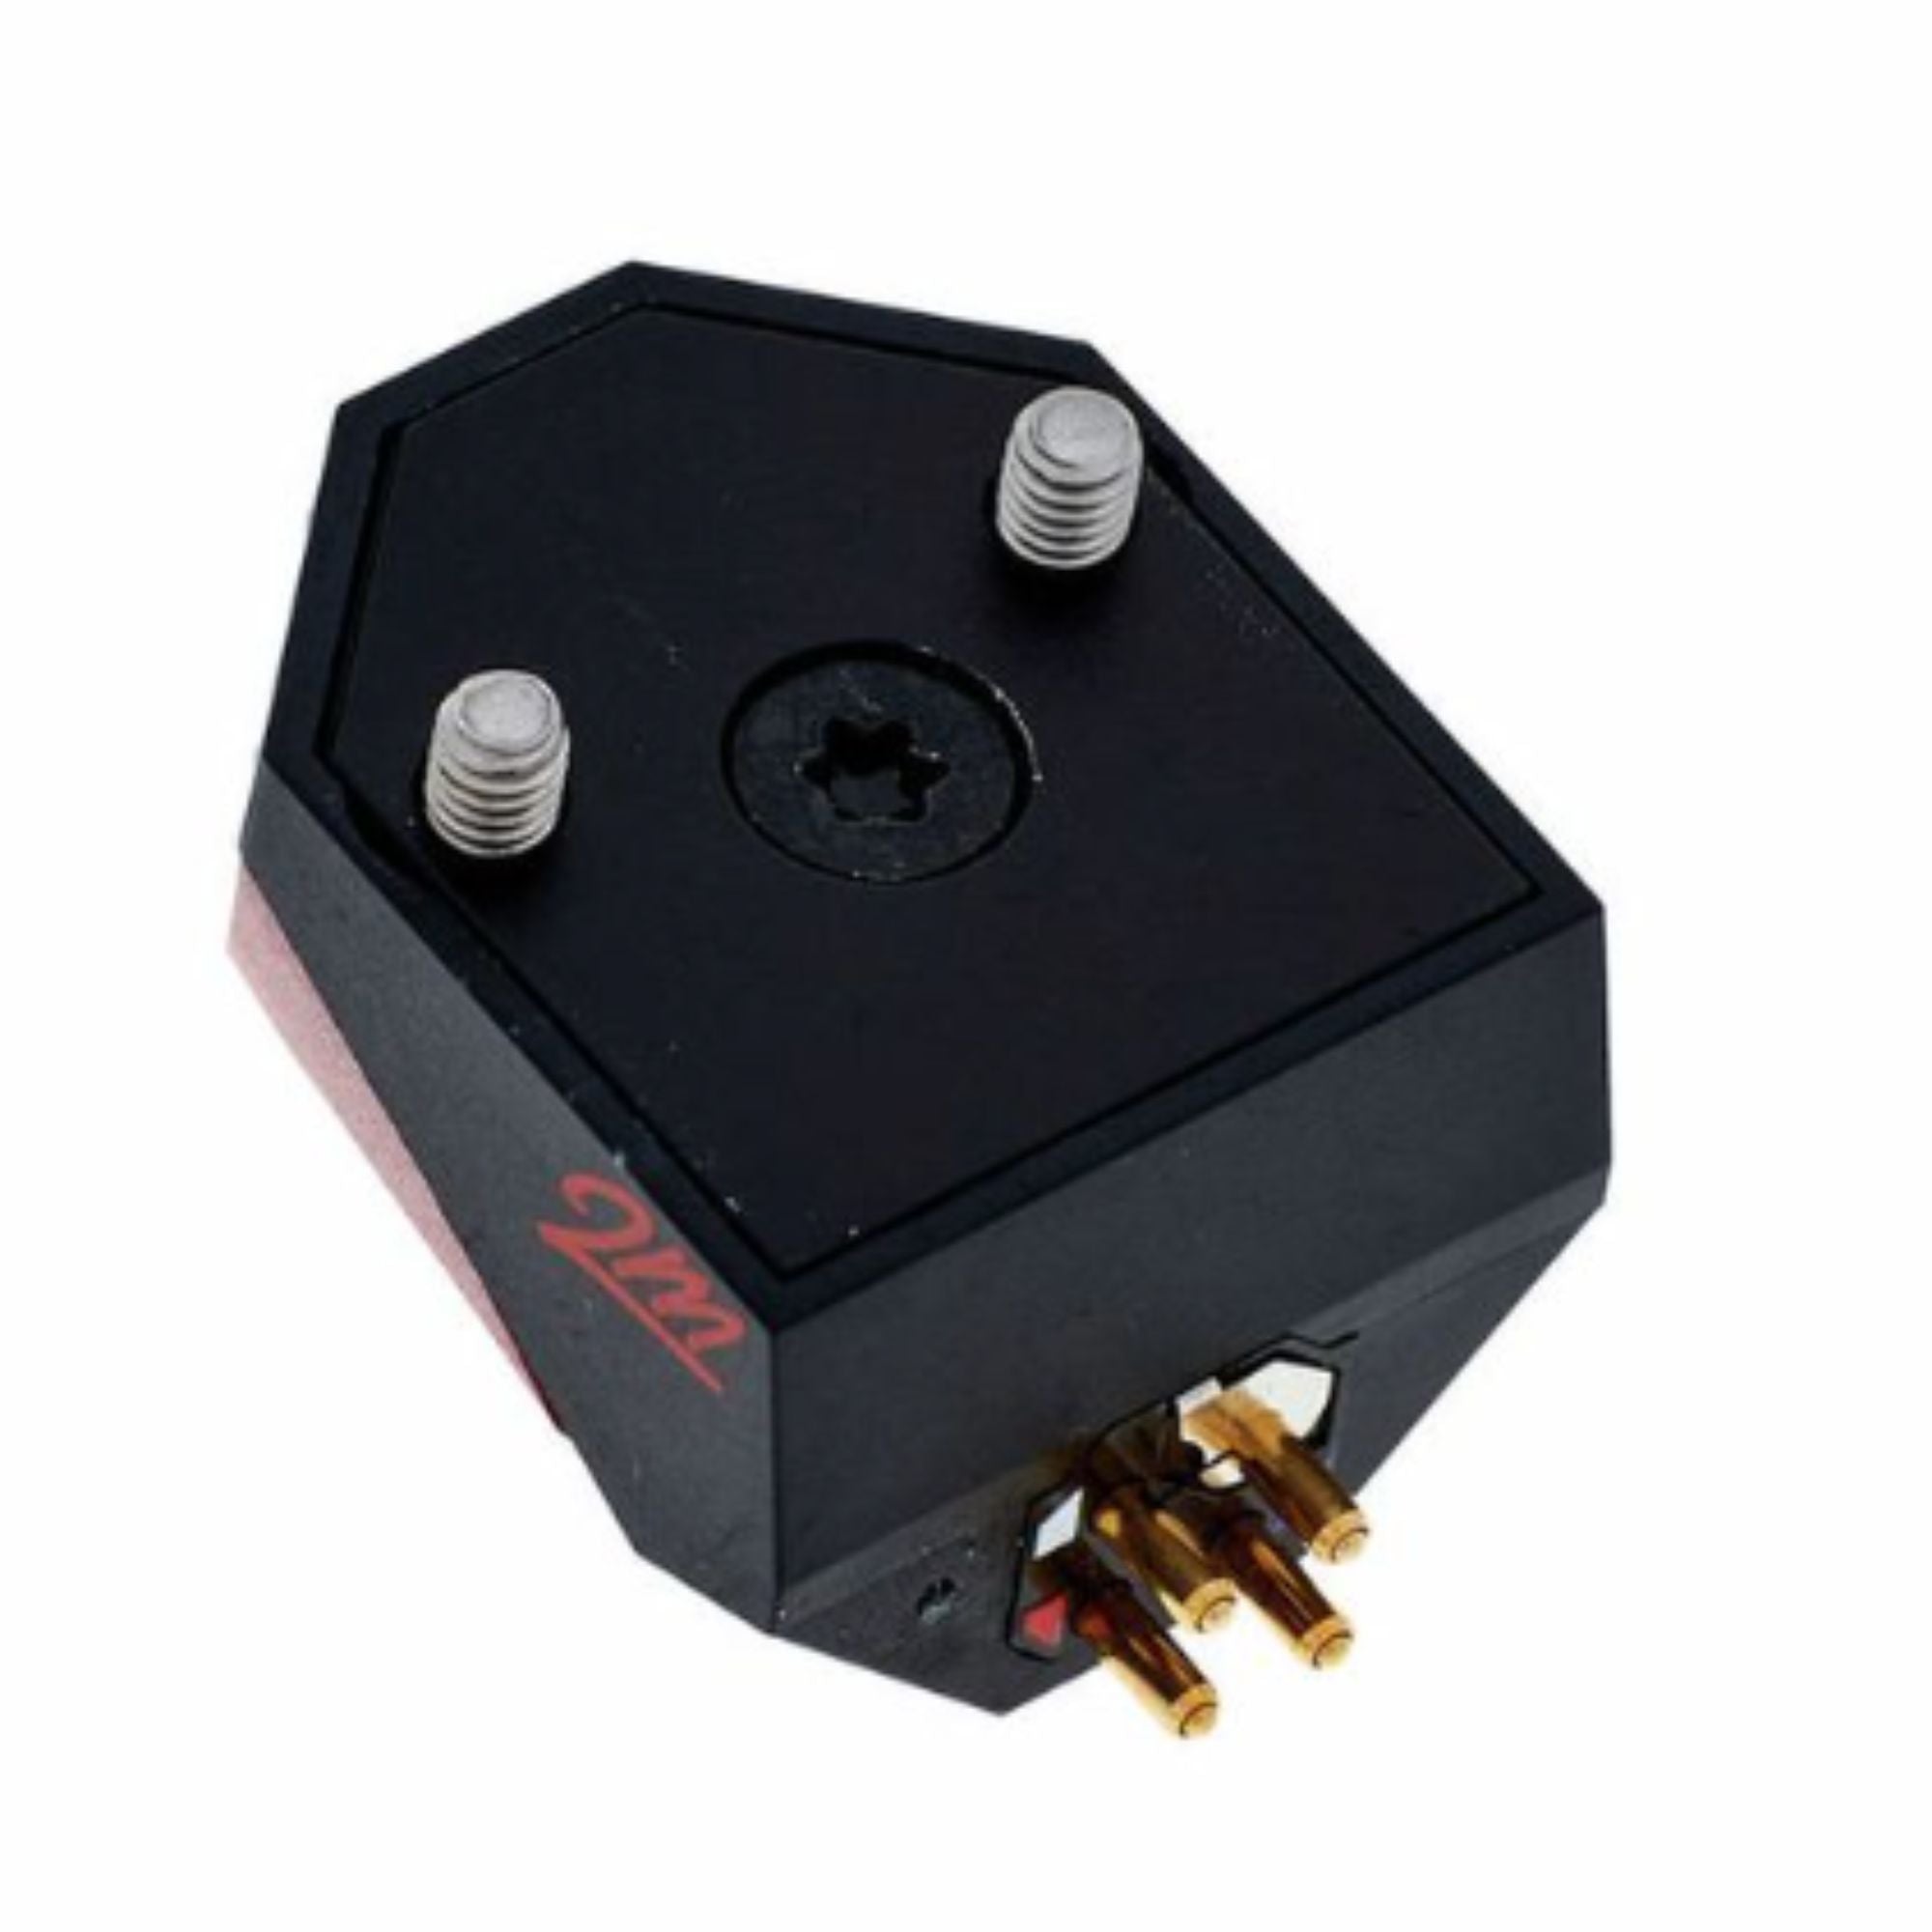 Ortofon 2M Red Verso - Moving Magnet Cartridge, Ortofon, Turntable Accessories - AVStore.in